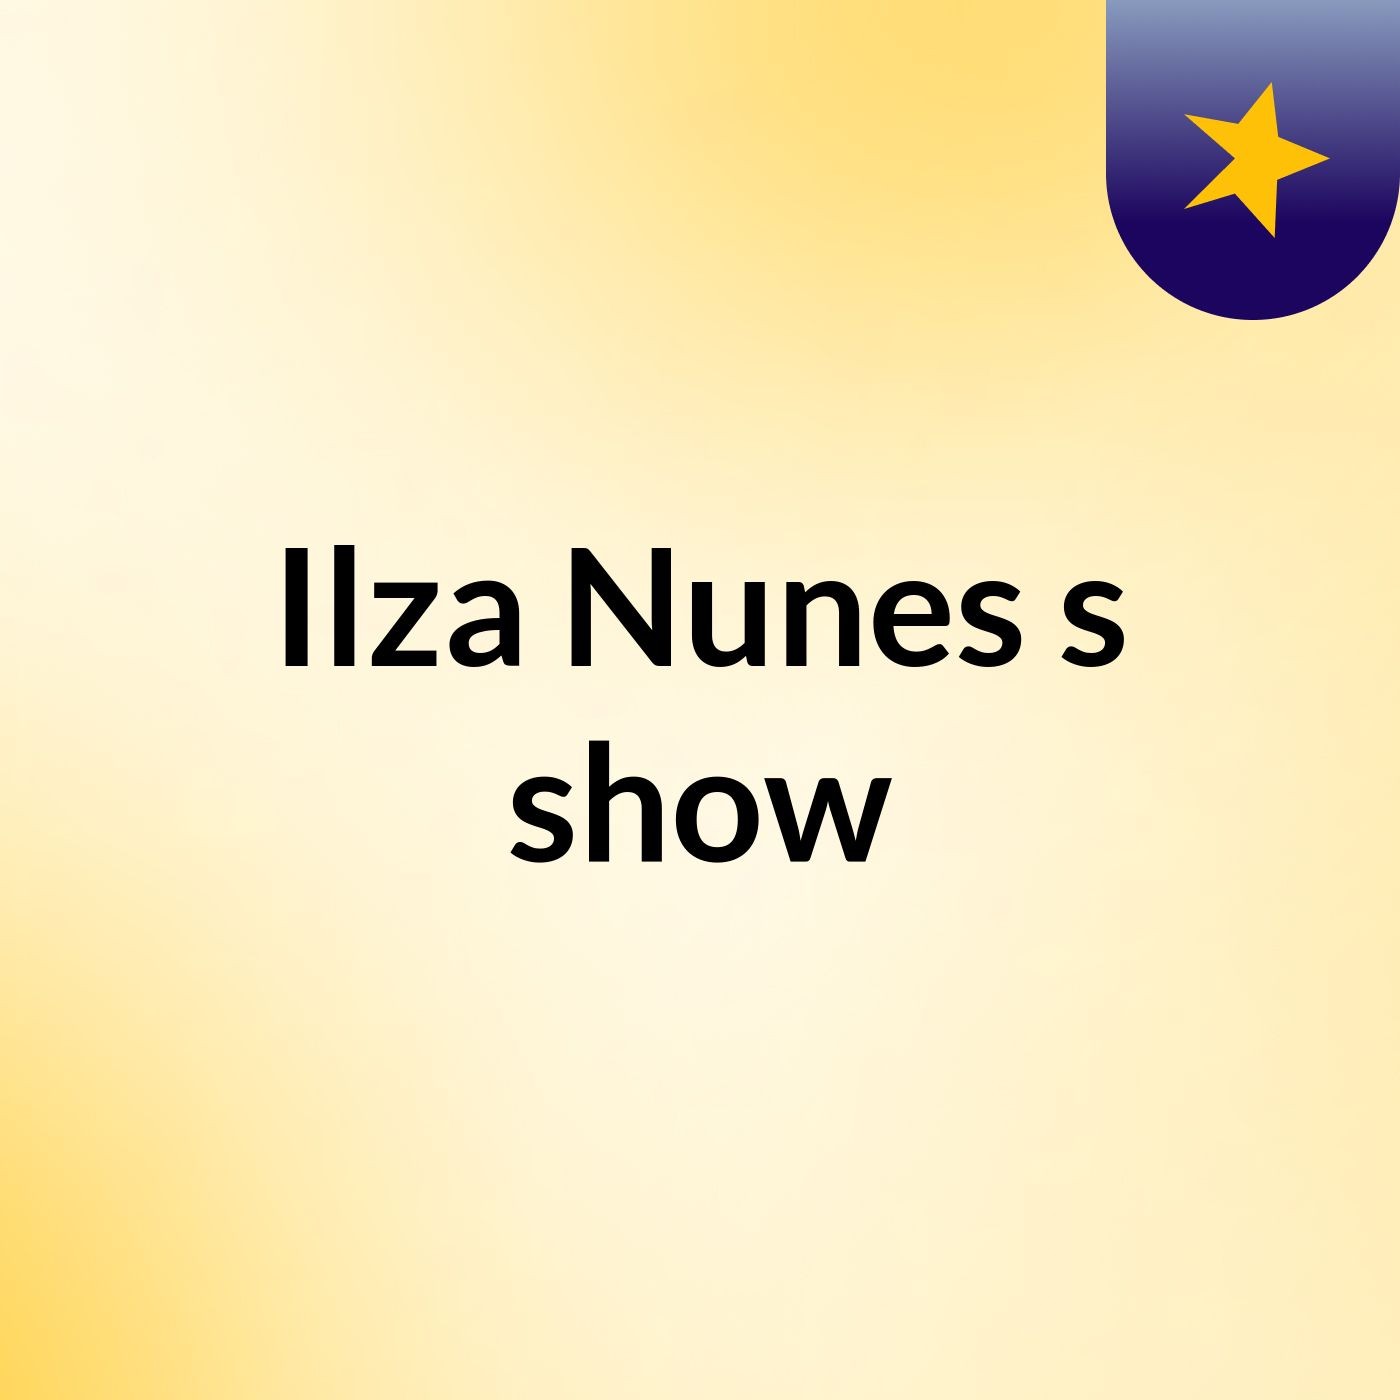 Ilza Nunes's show